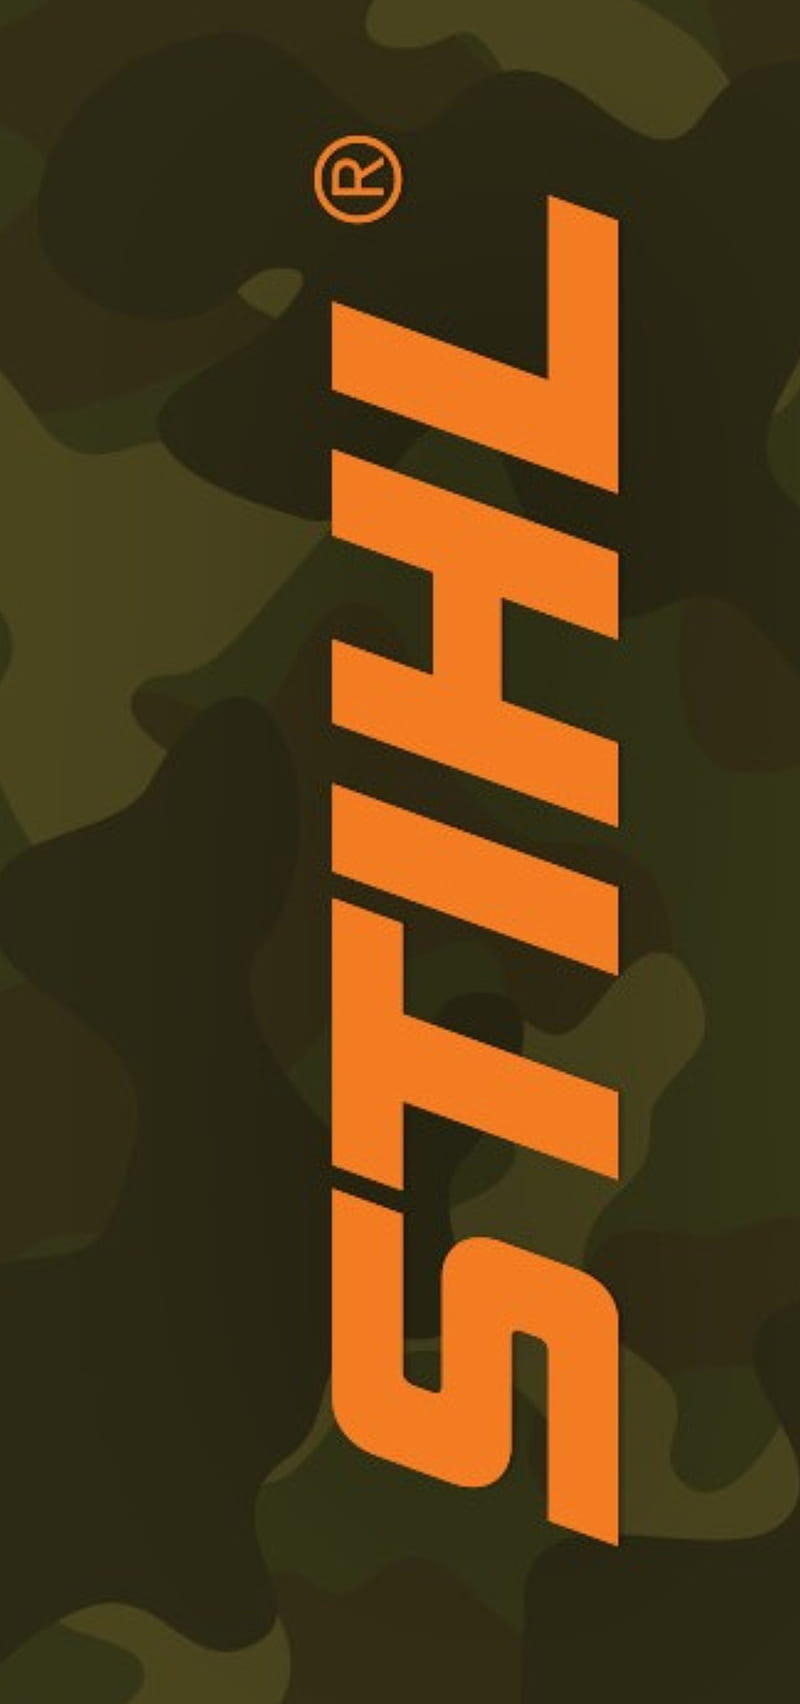 stihl logo wallpaper